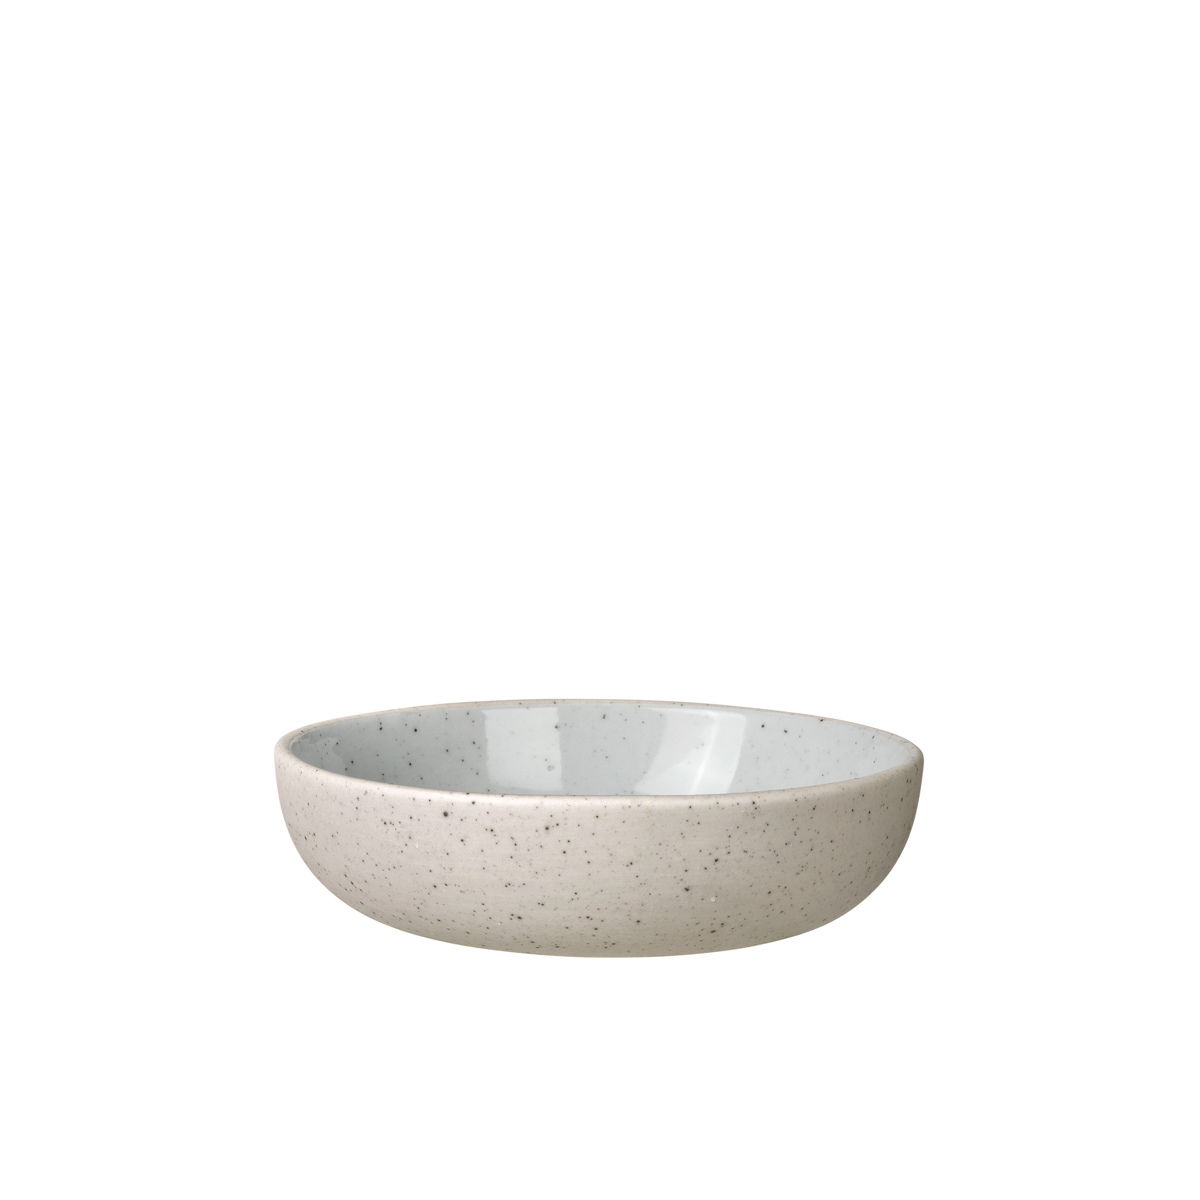 Snackschale -SABLO- Cloud 80 ml, Ø 10 cm. Material: Keramik. Von Blomus.